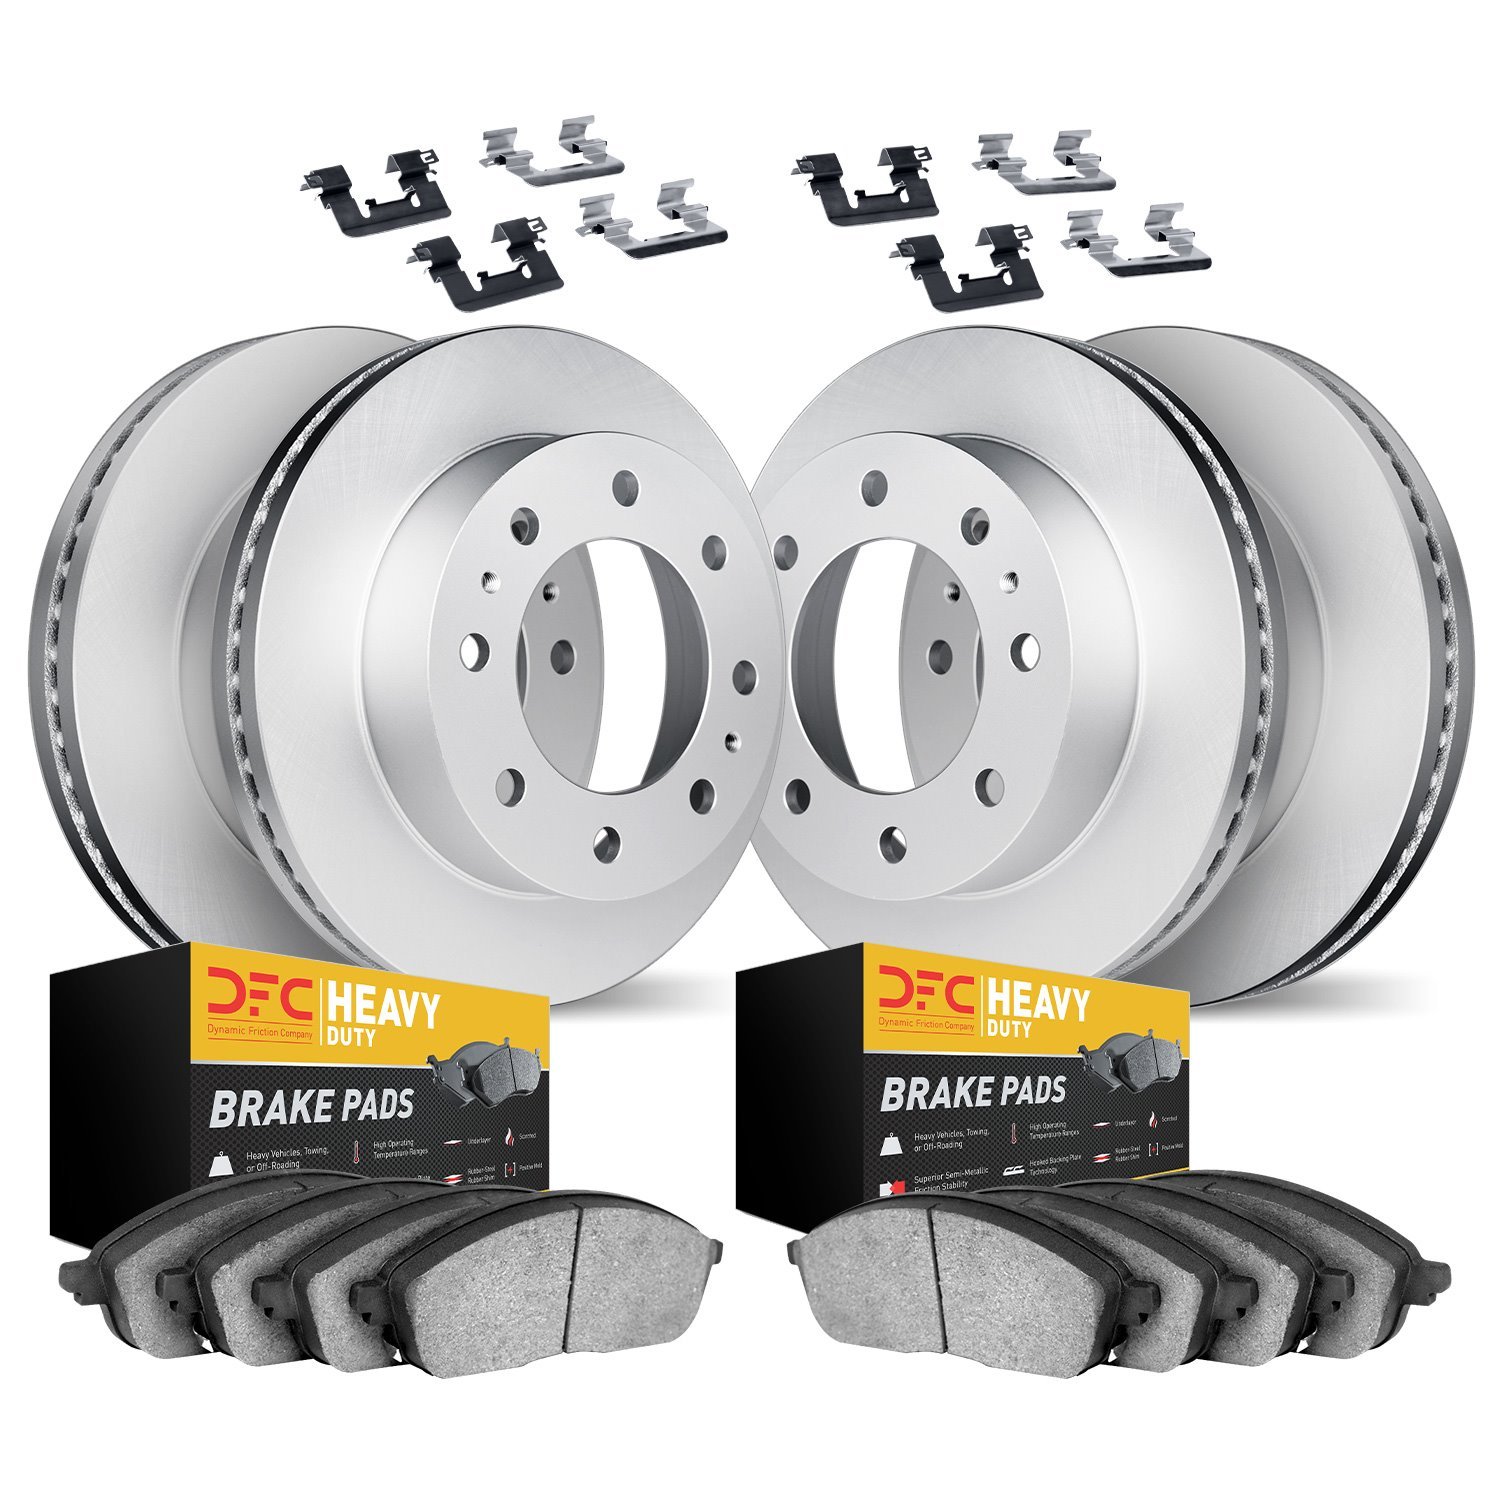 4214-48133 Geospec Brake Rotors w/Heavy-Duty Brake Pads & Hardware, 2001-2010 GM, Position: Front and Rear